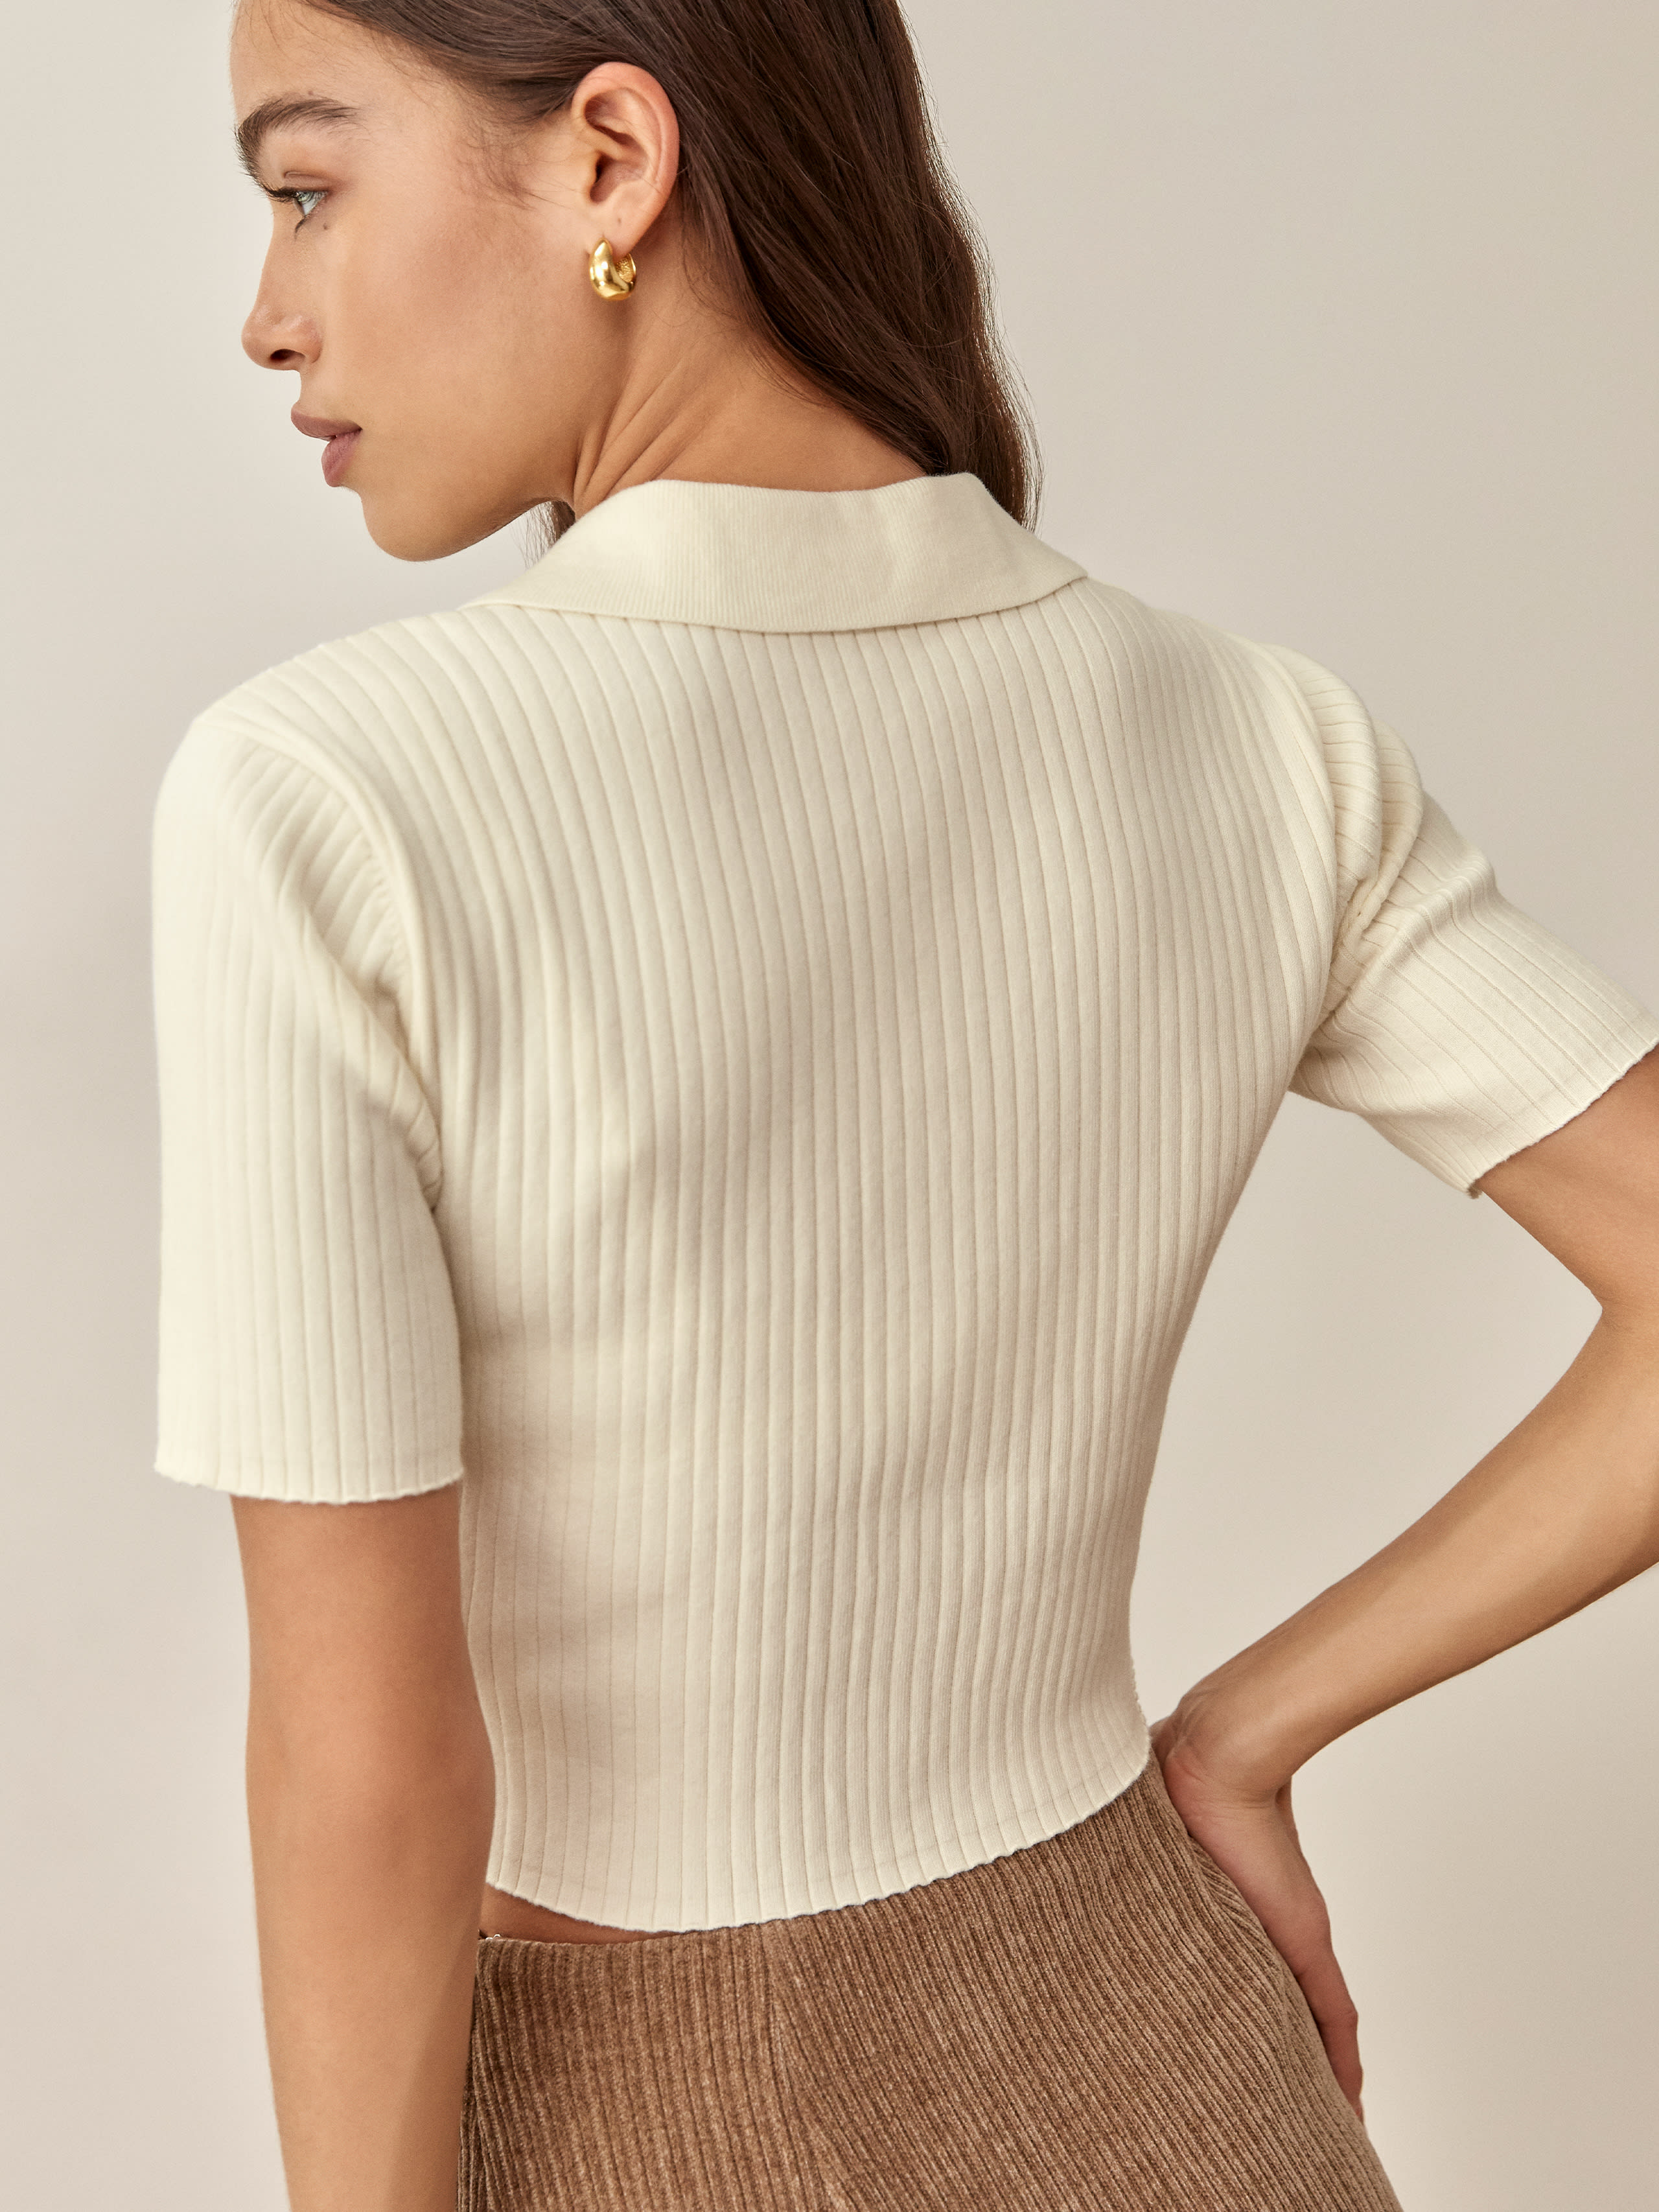 Moda Cotton Collared Sweater, thumbnail image 3